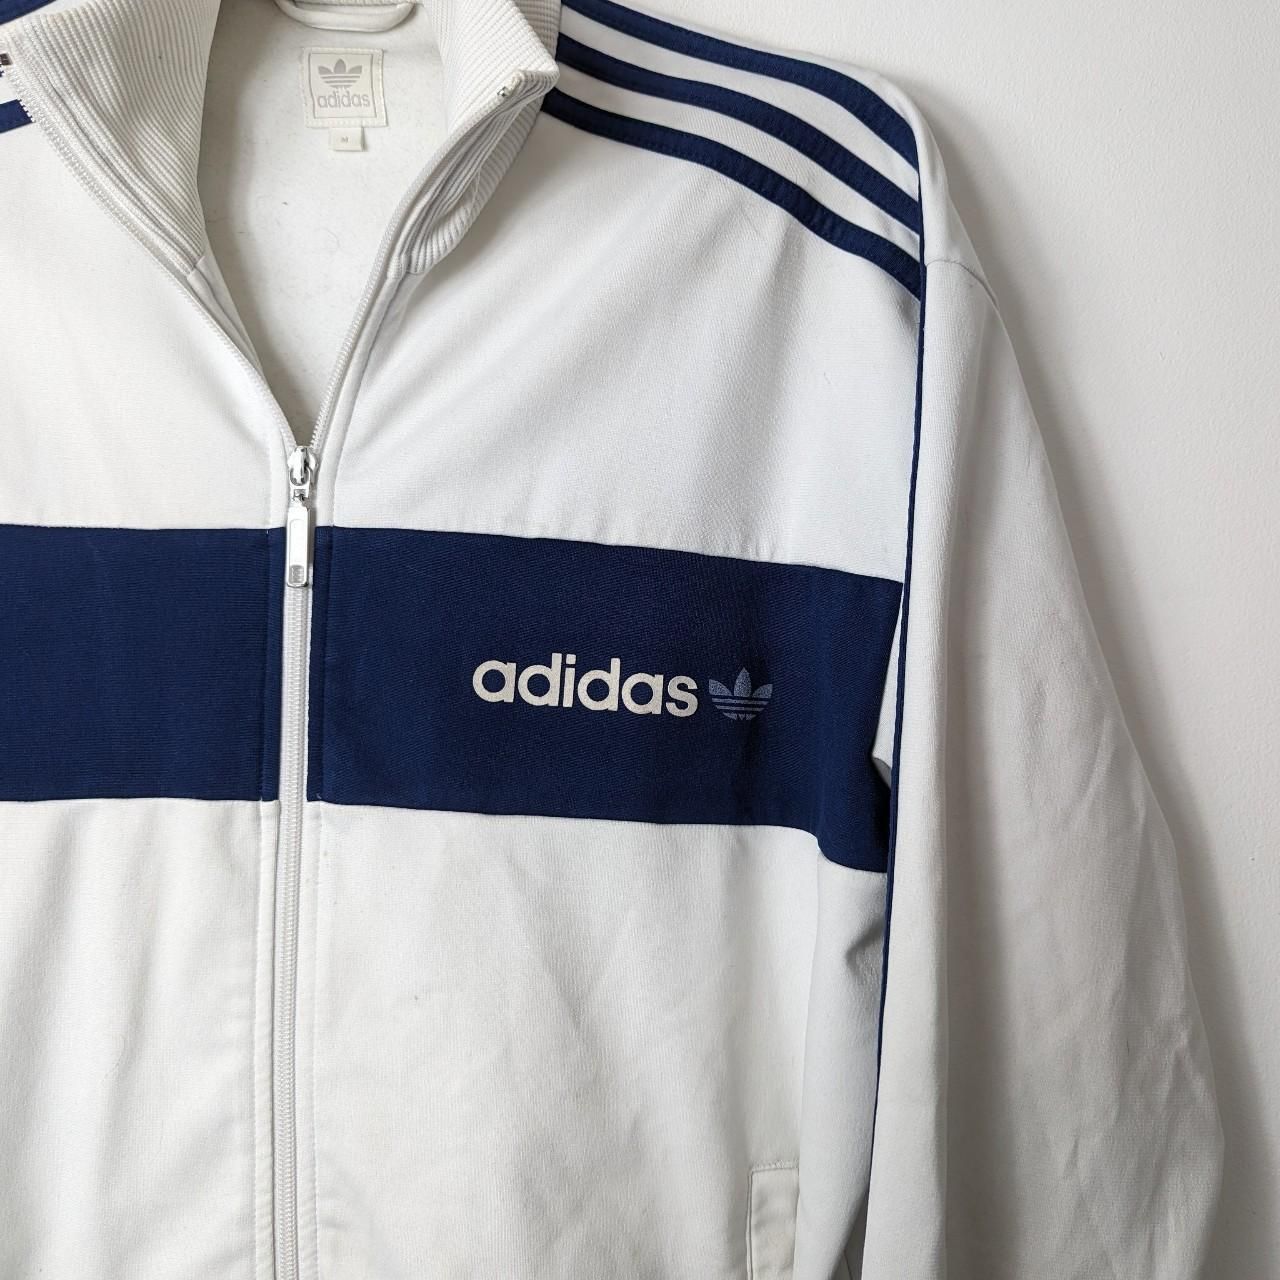 Adidas Vintage Adidas y2k Track top Track suit Sweatshirt Size US M / EU 48-50 / 2 - 2 Preview